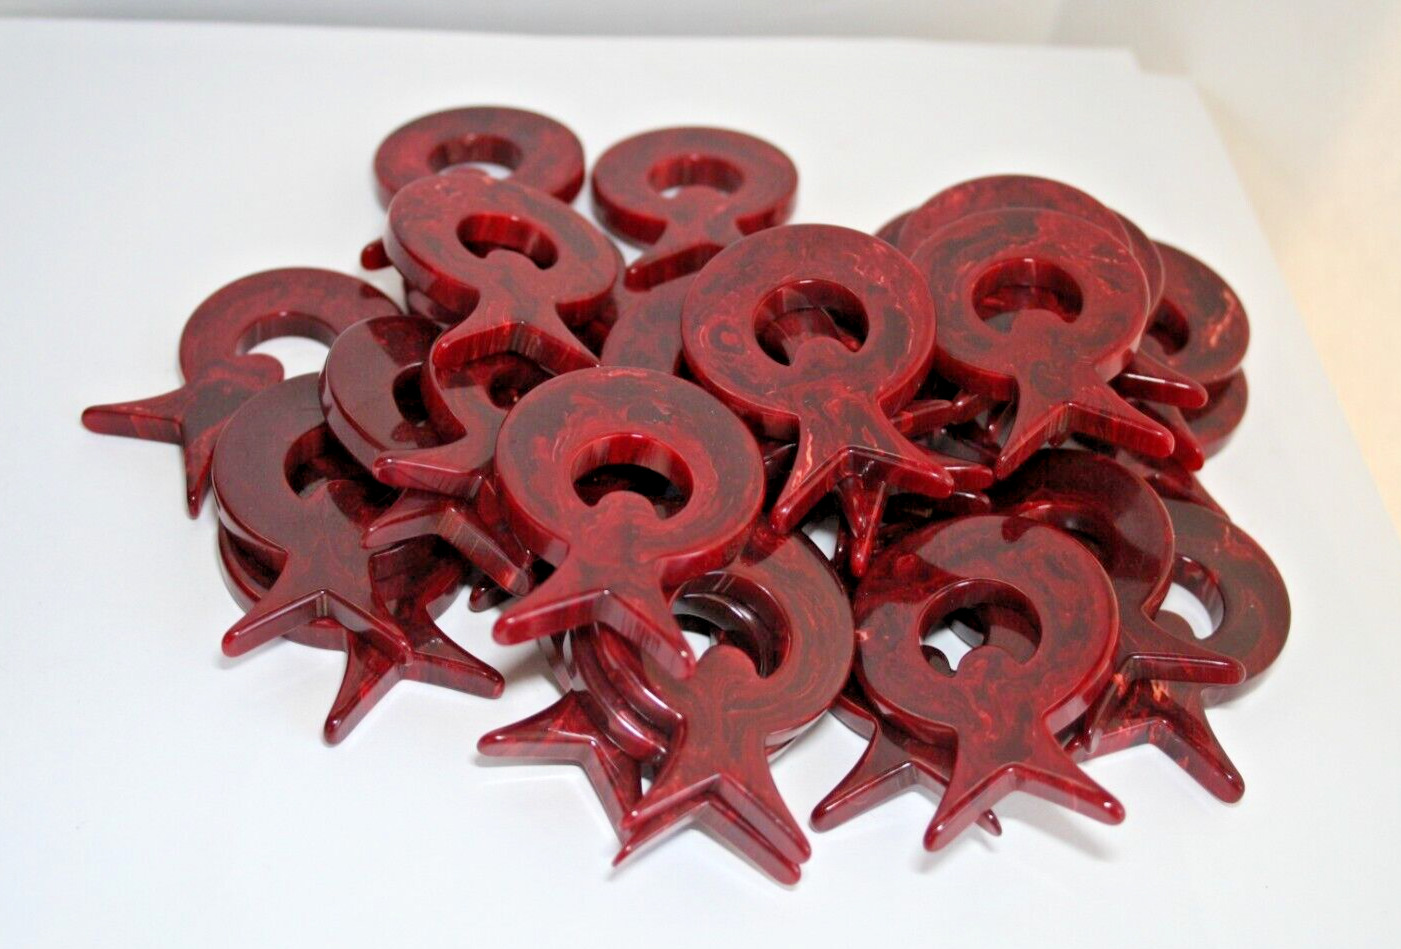 30 vintage Bakelite Pieces Burgundy Red Color - Arts, Crafts, Jewelry Making